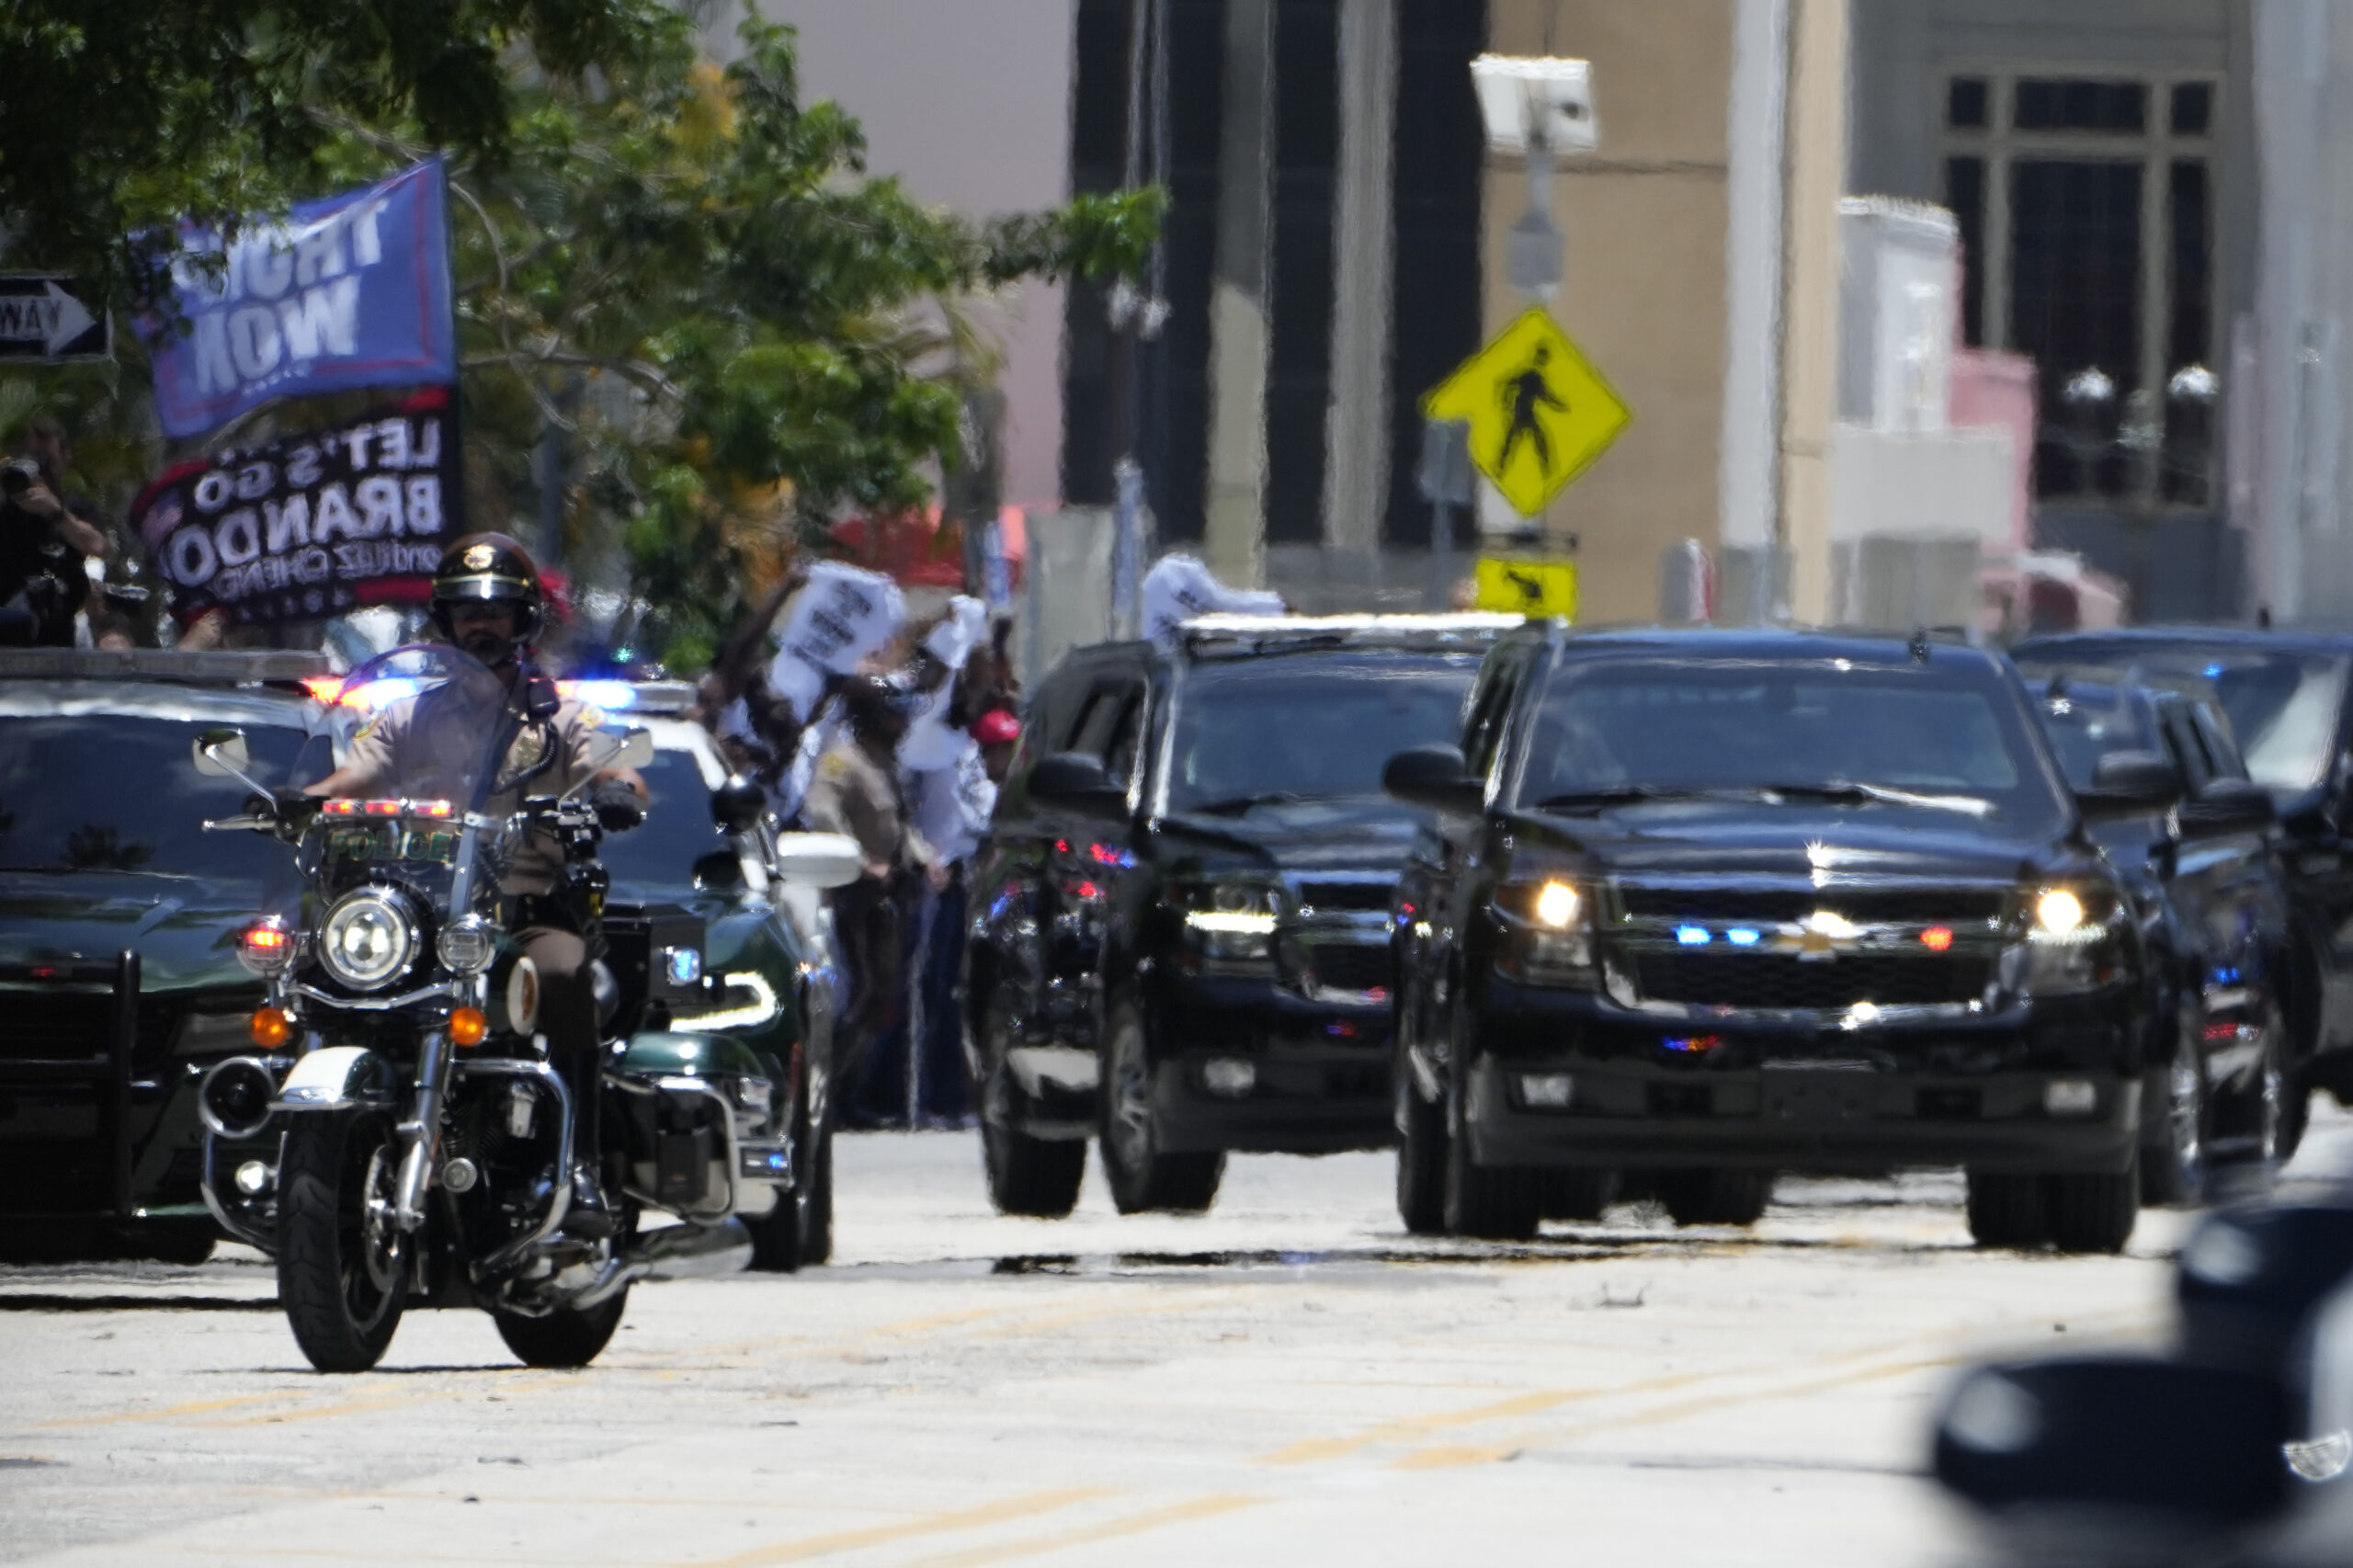 The motorcade carrying former President Donald Trump arrives near the Wilkie D. Ferguson Jr. U.S. C...